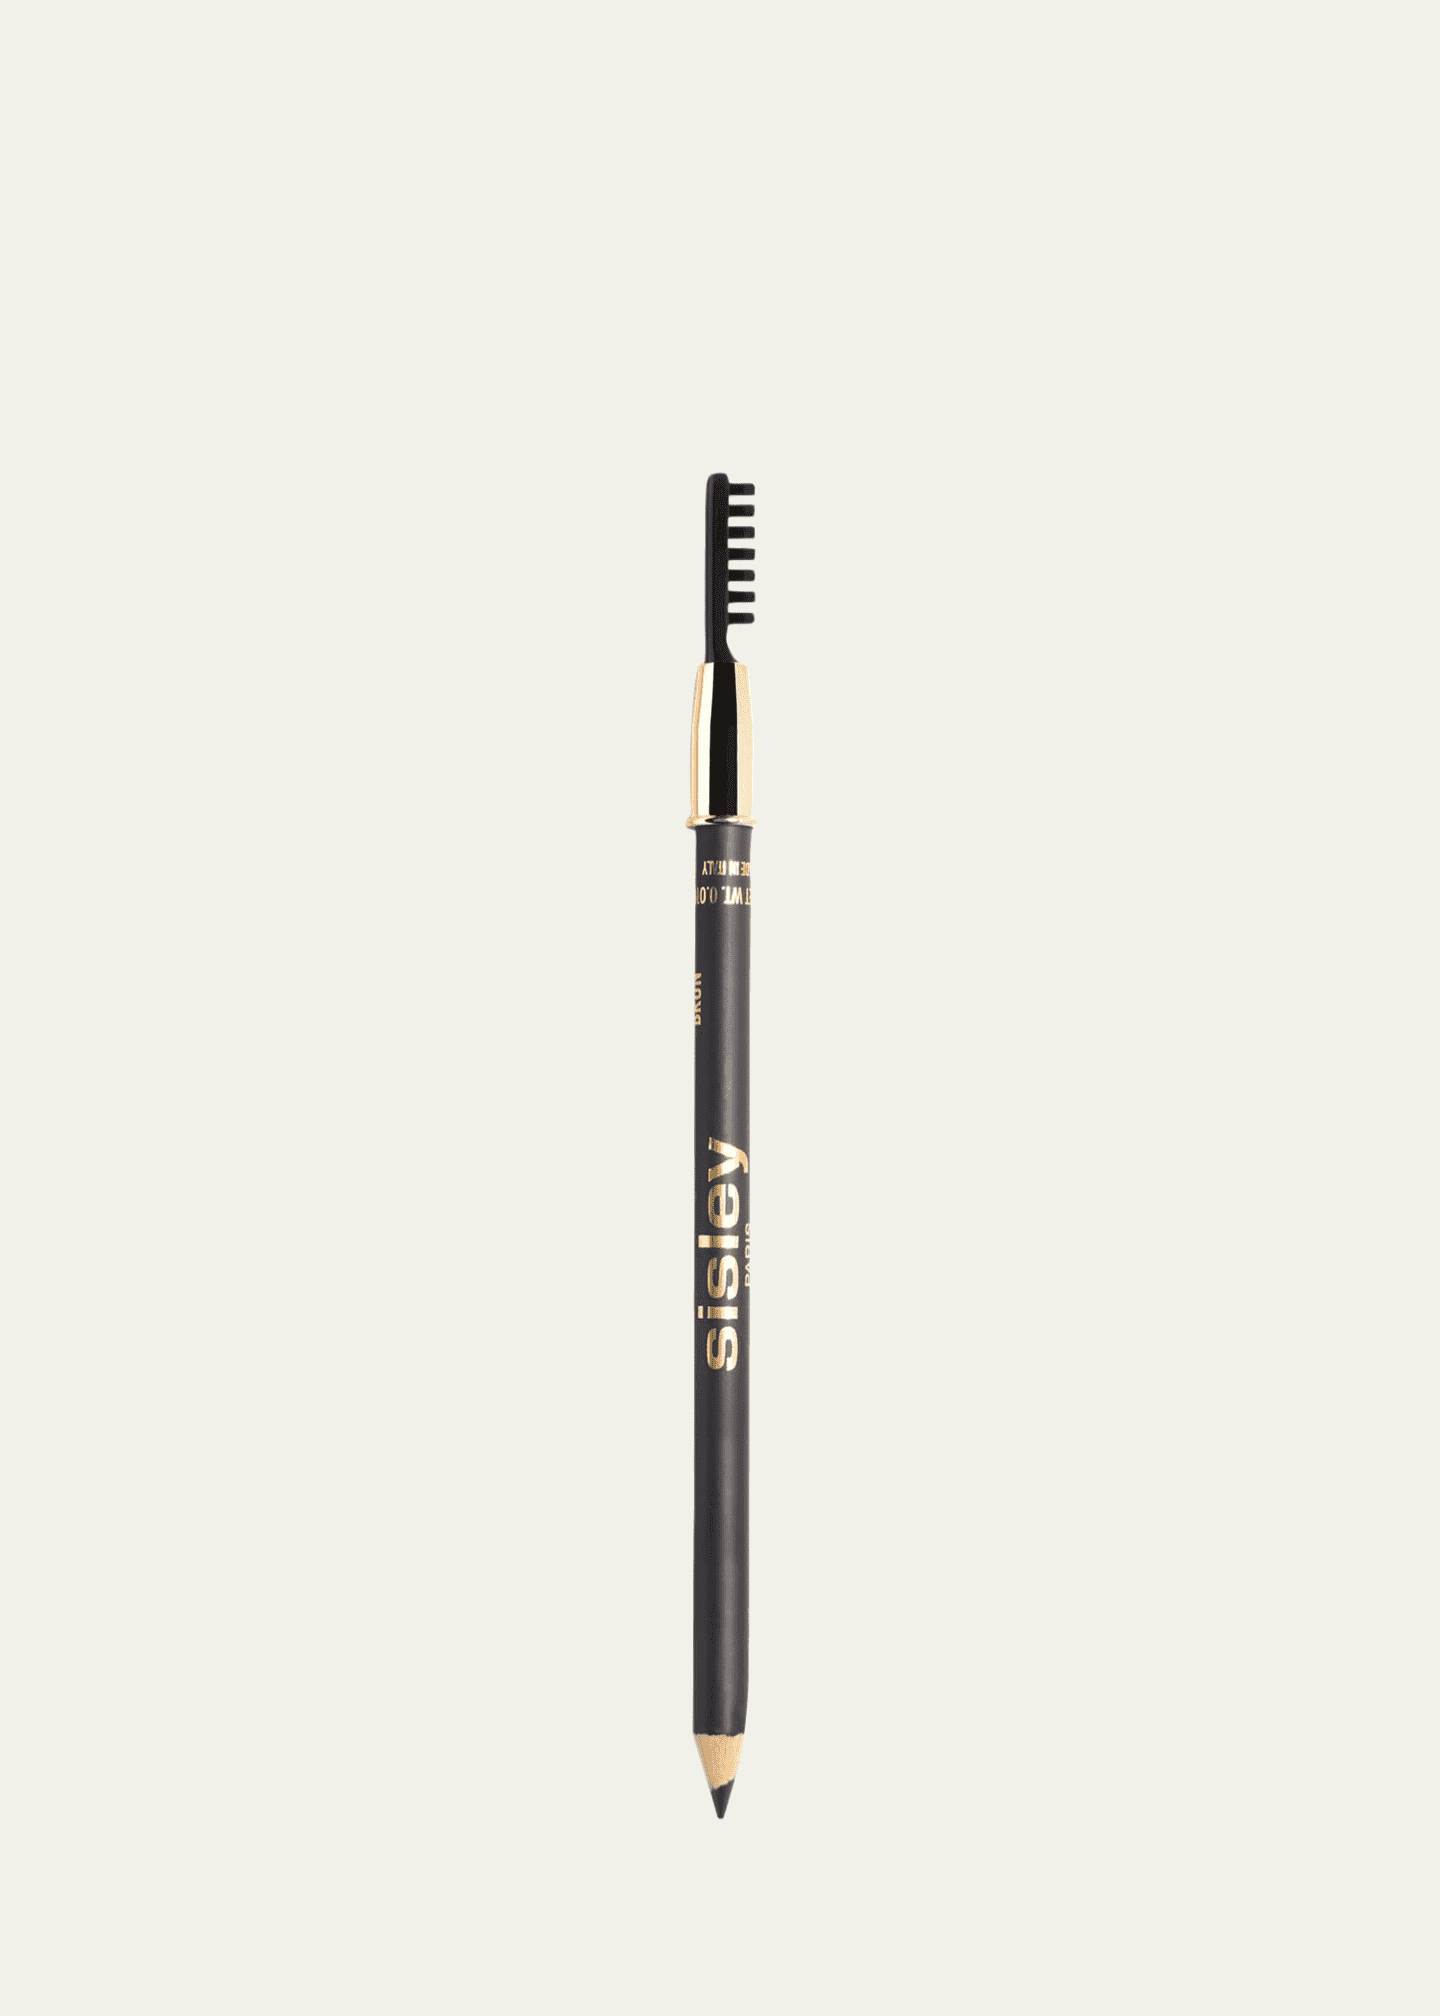 Sisley-Paris Phyto-Sourcils Perfect Eyebrow Pencil Image 1 of 2